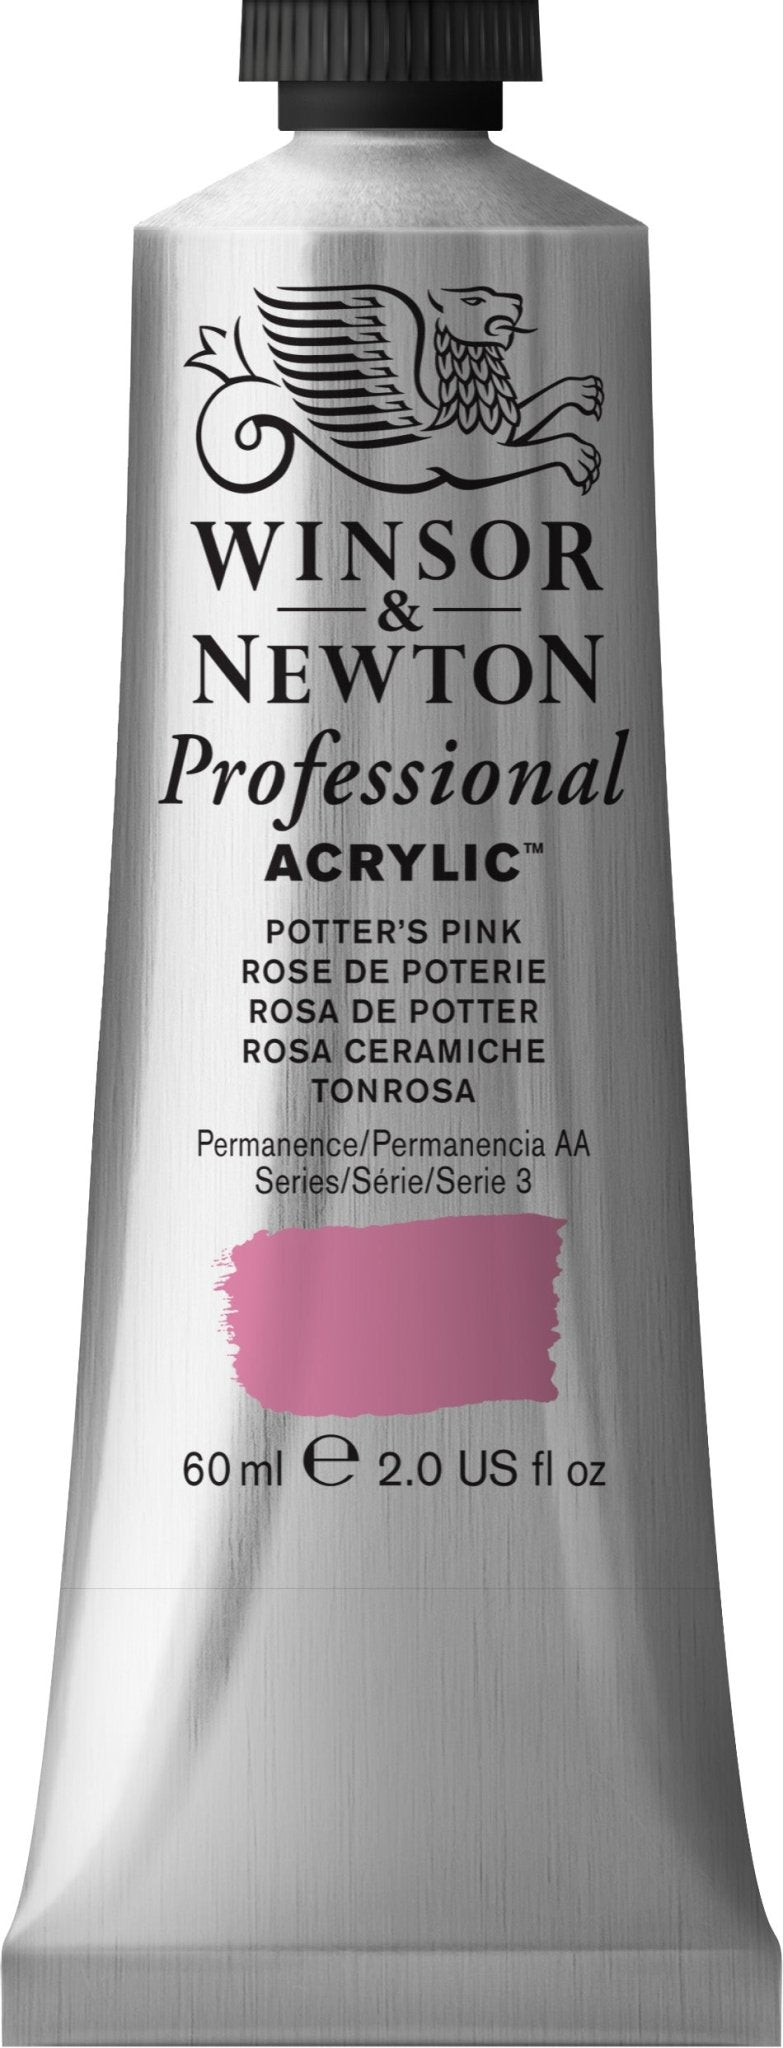 W & N Professional Acrylic 60ml Potter's Pink - theartshop.com.au